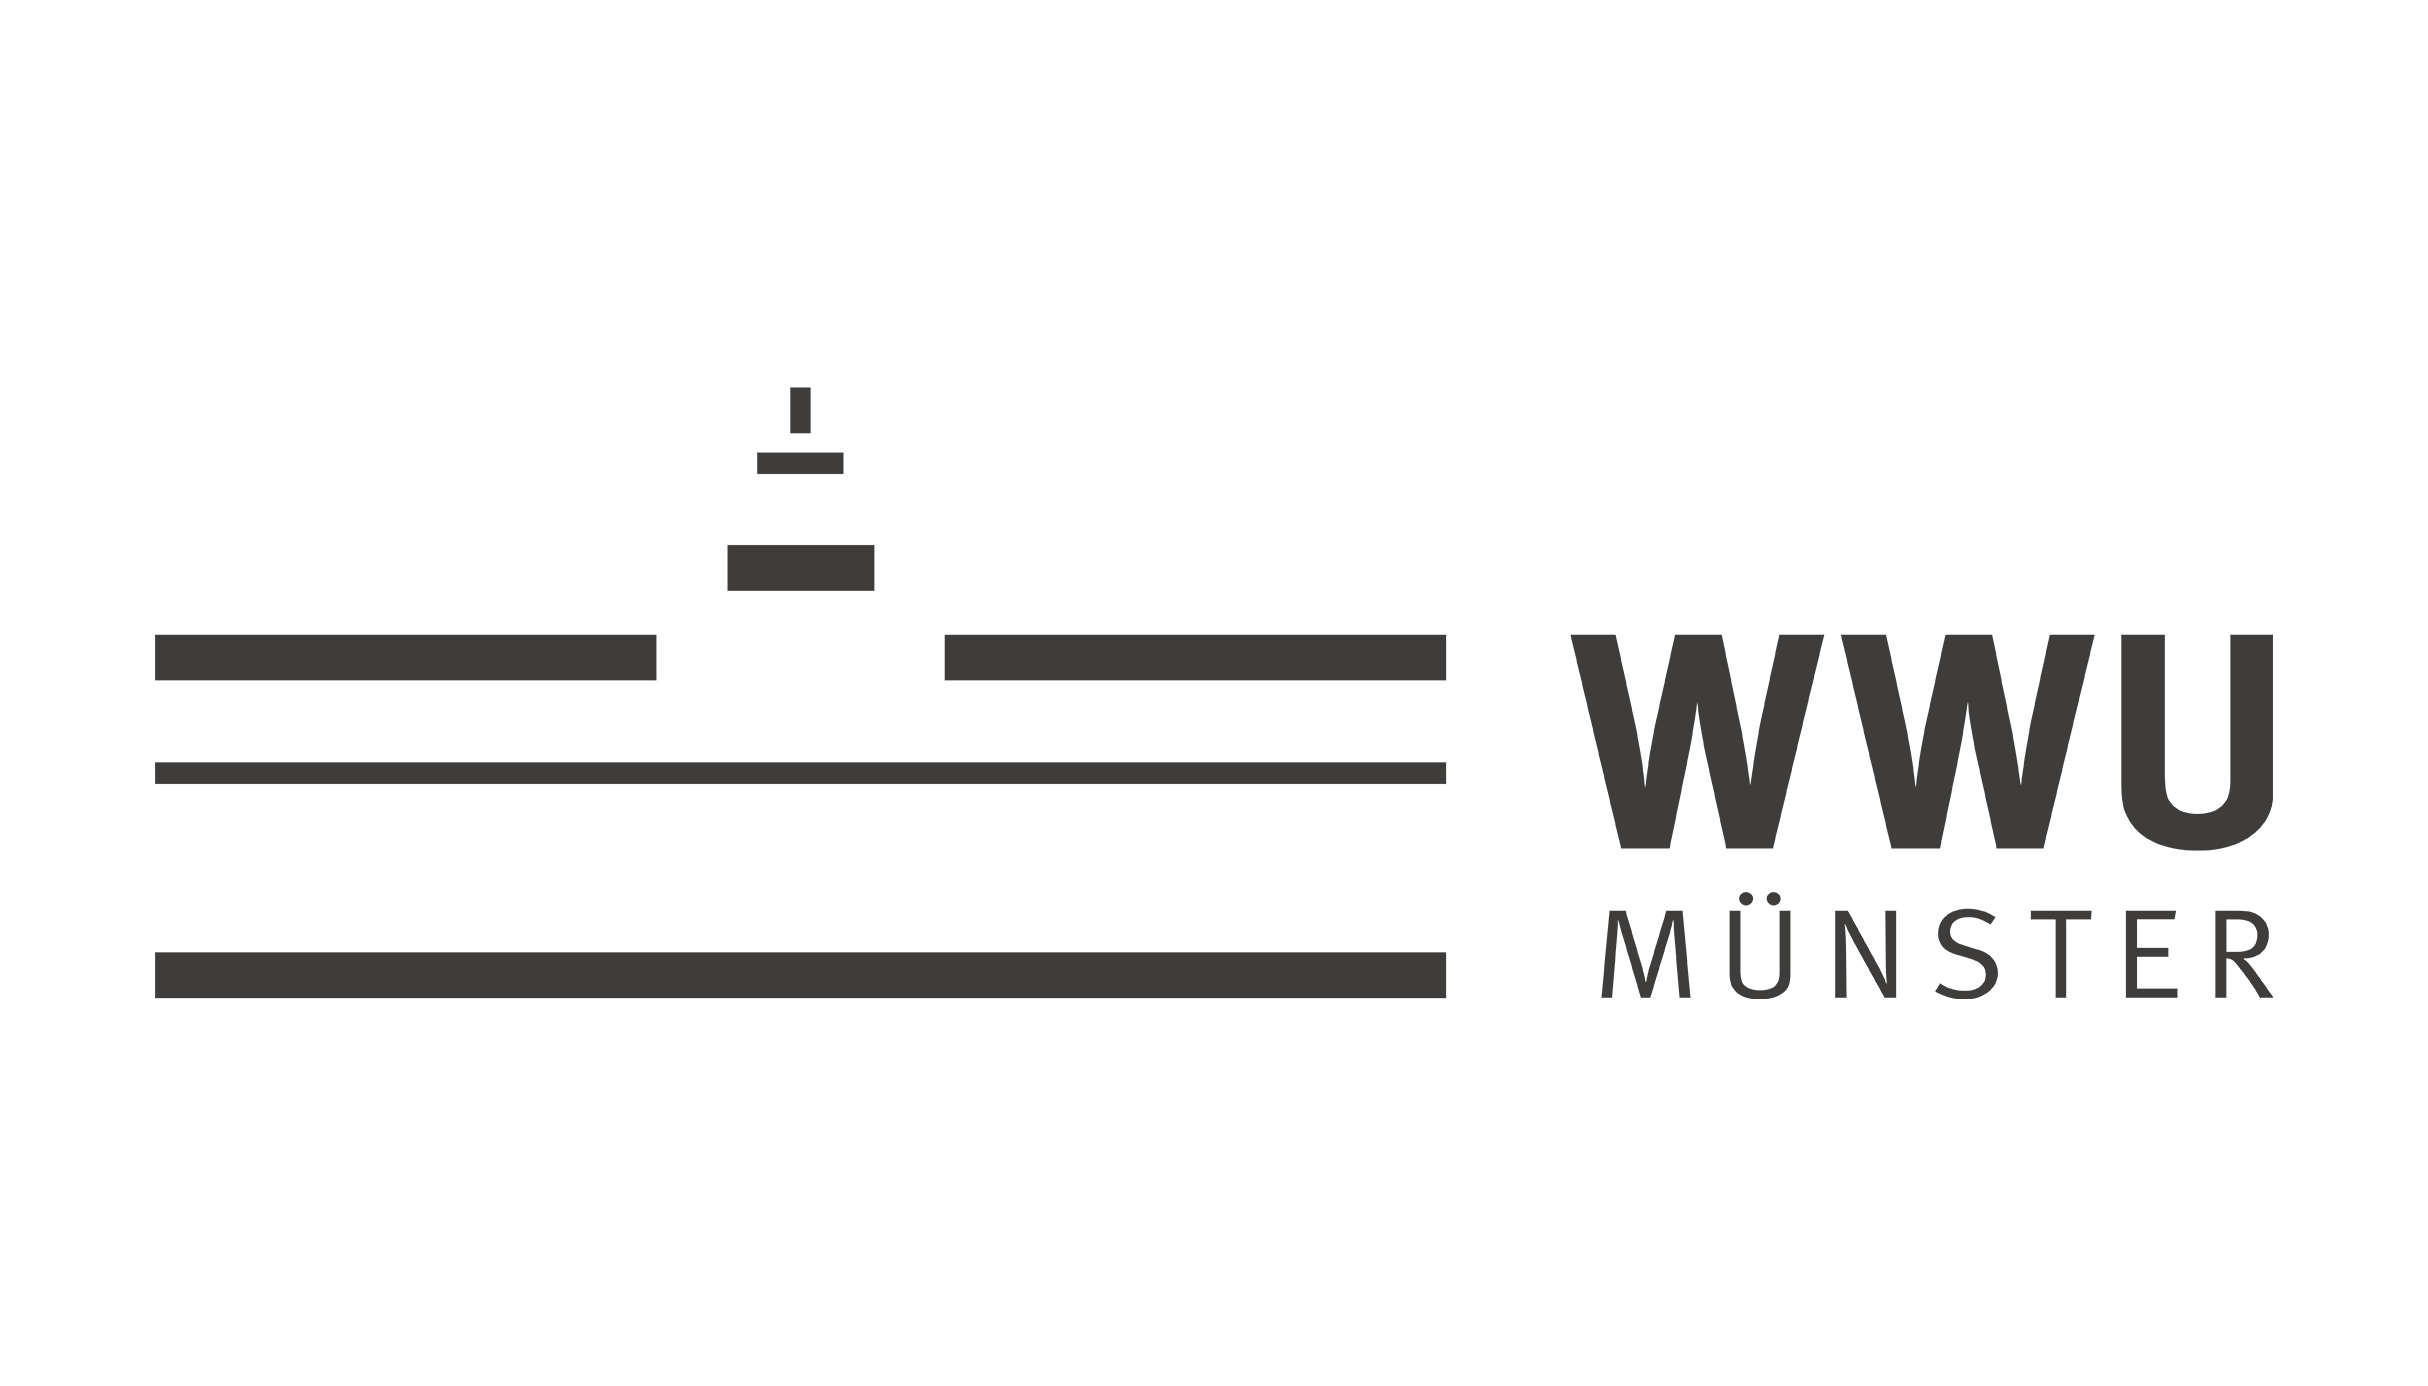 Logo WWU Münster